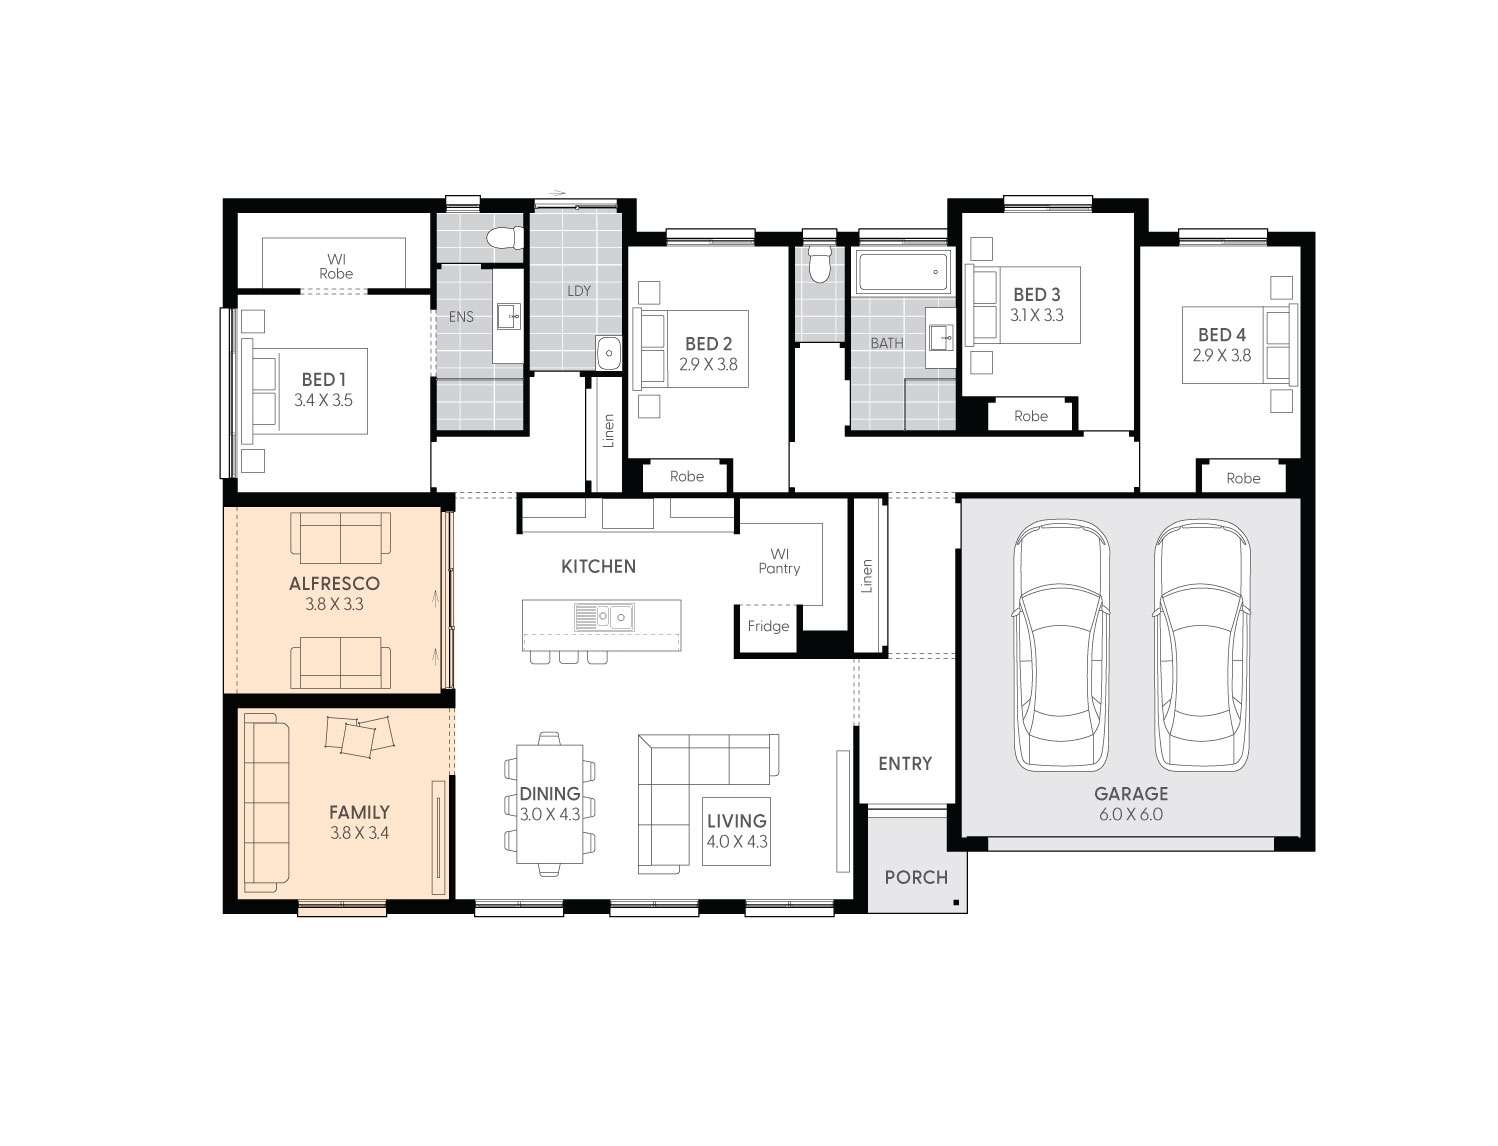 Cambridge25-floor-plan-FAMILY-AND-ALFRESCO-POSITION-SWAP-LHS_0.jpg 